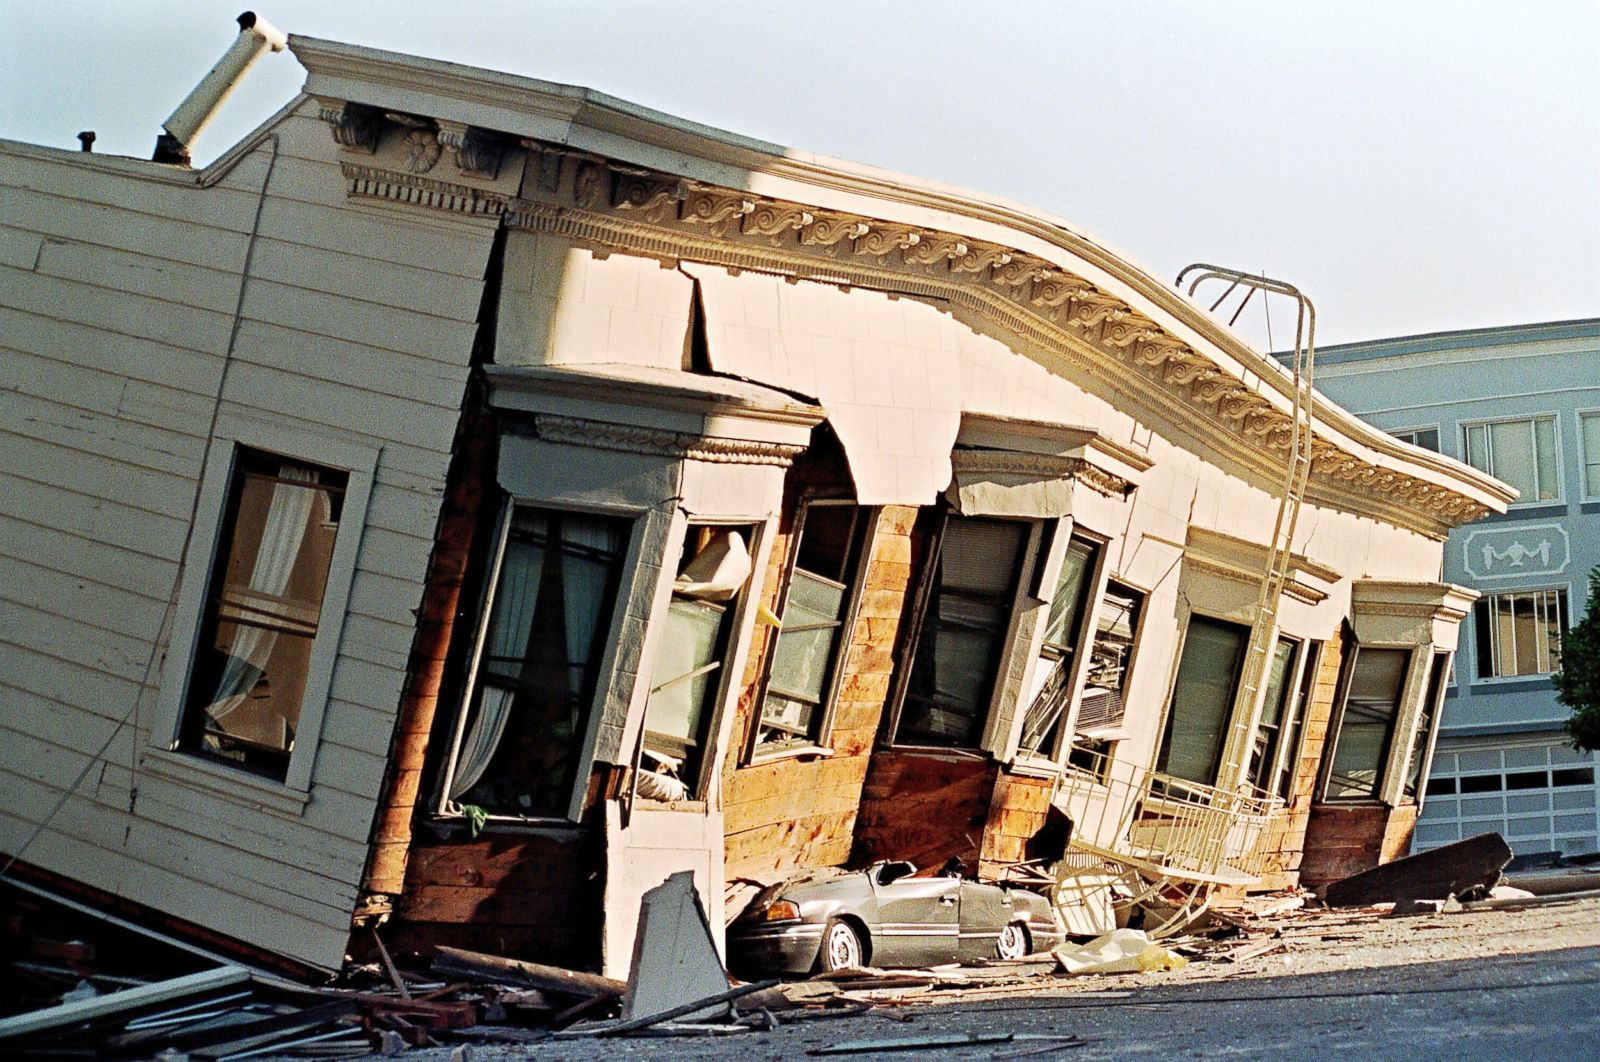 GTY San Francisco Earthquake Anniversary 08 Jef 141016 3x2 1600 